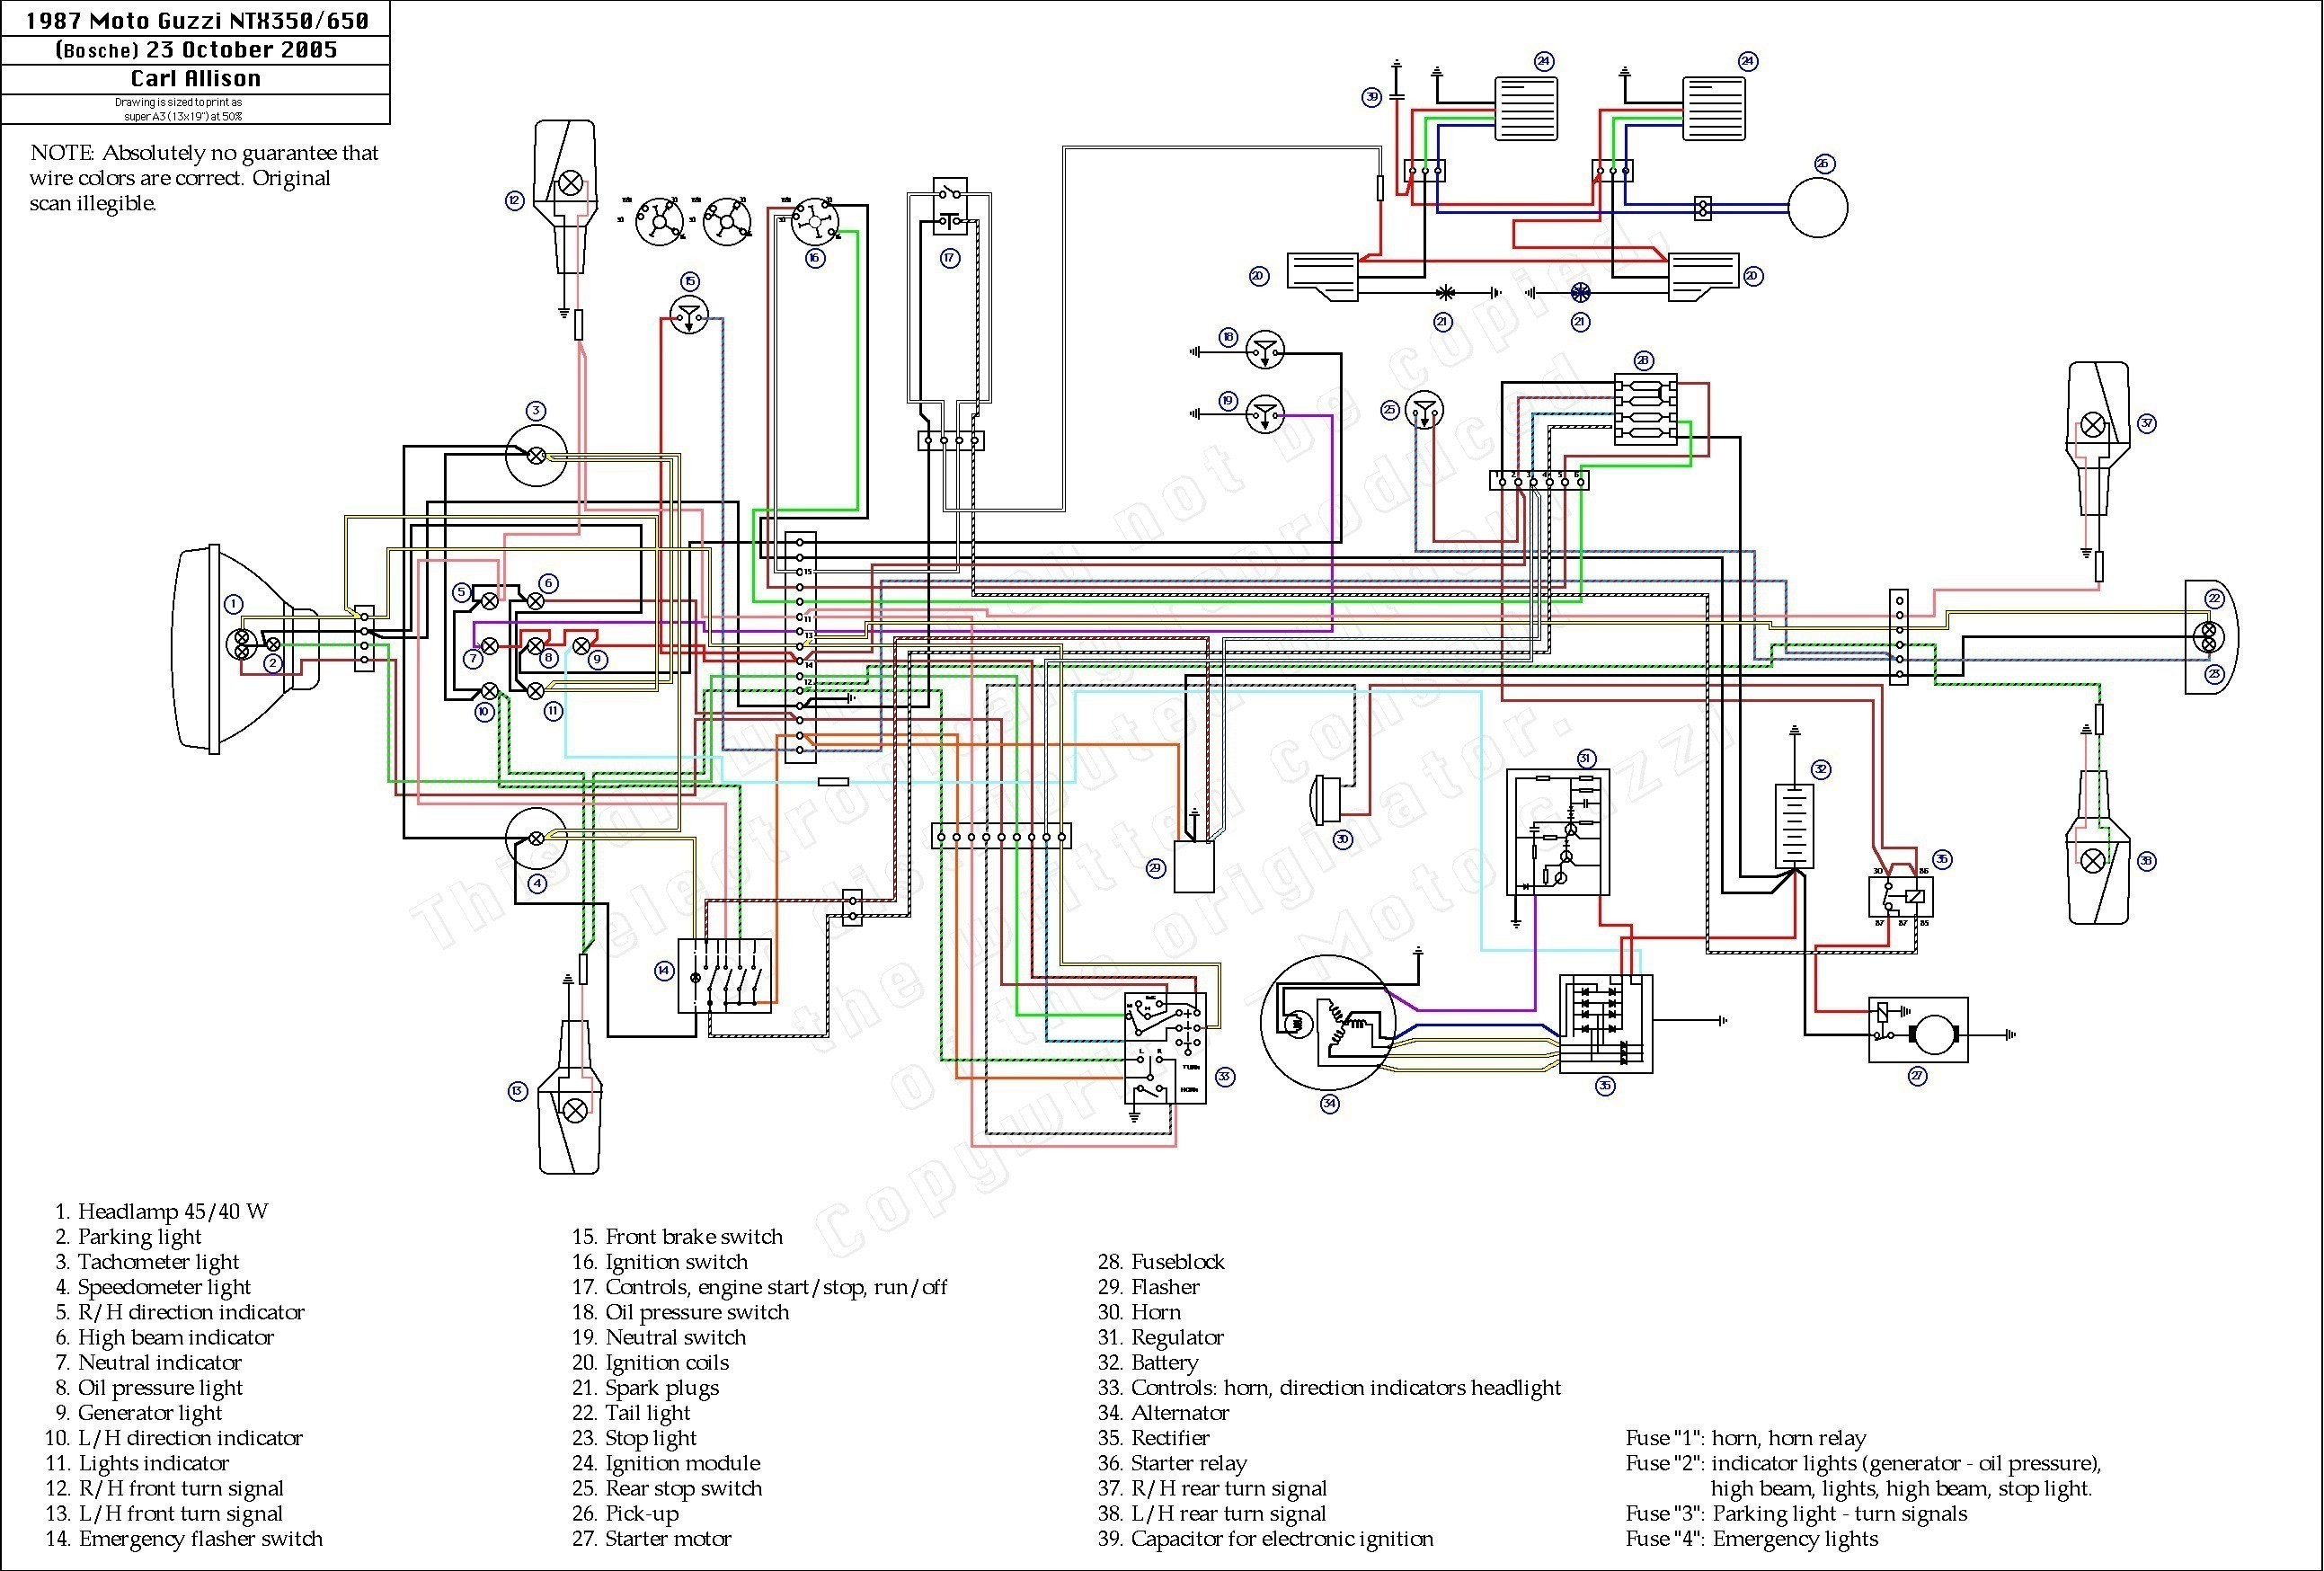 Chinese Generator Wiring Diagram New Indicator Wiring Diagram Relay Save 110cc Chinese atv Wiring Diagram